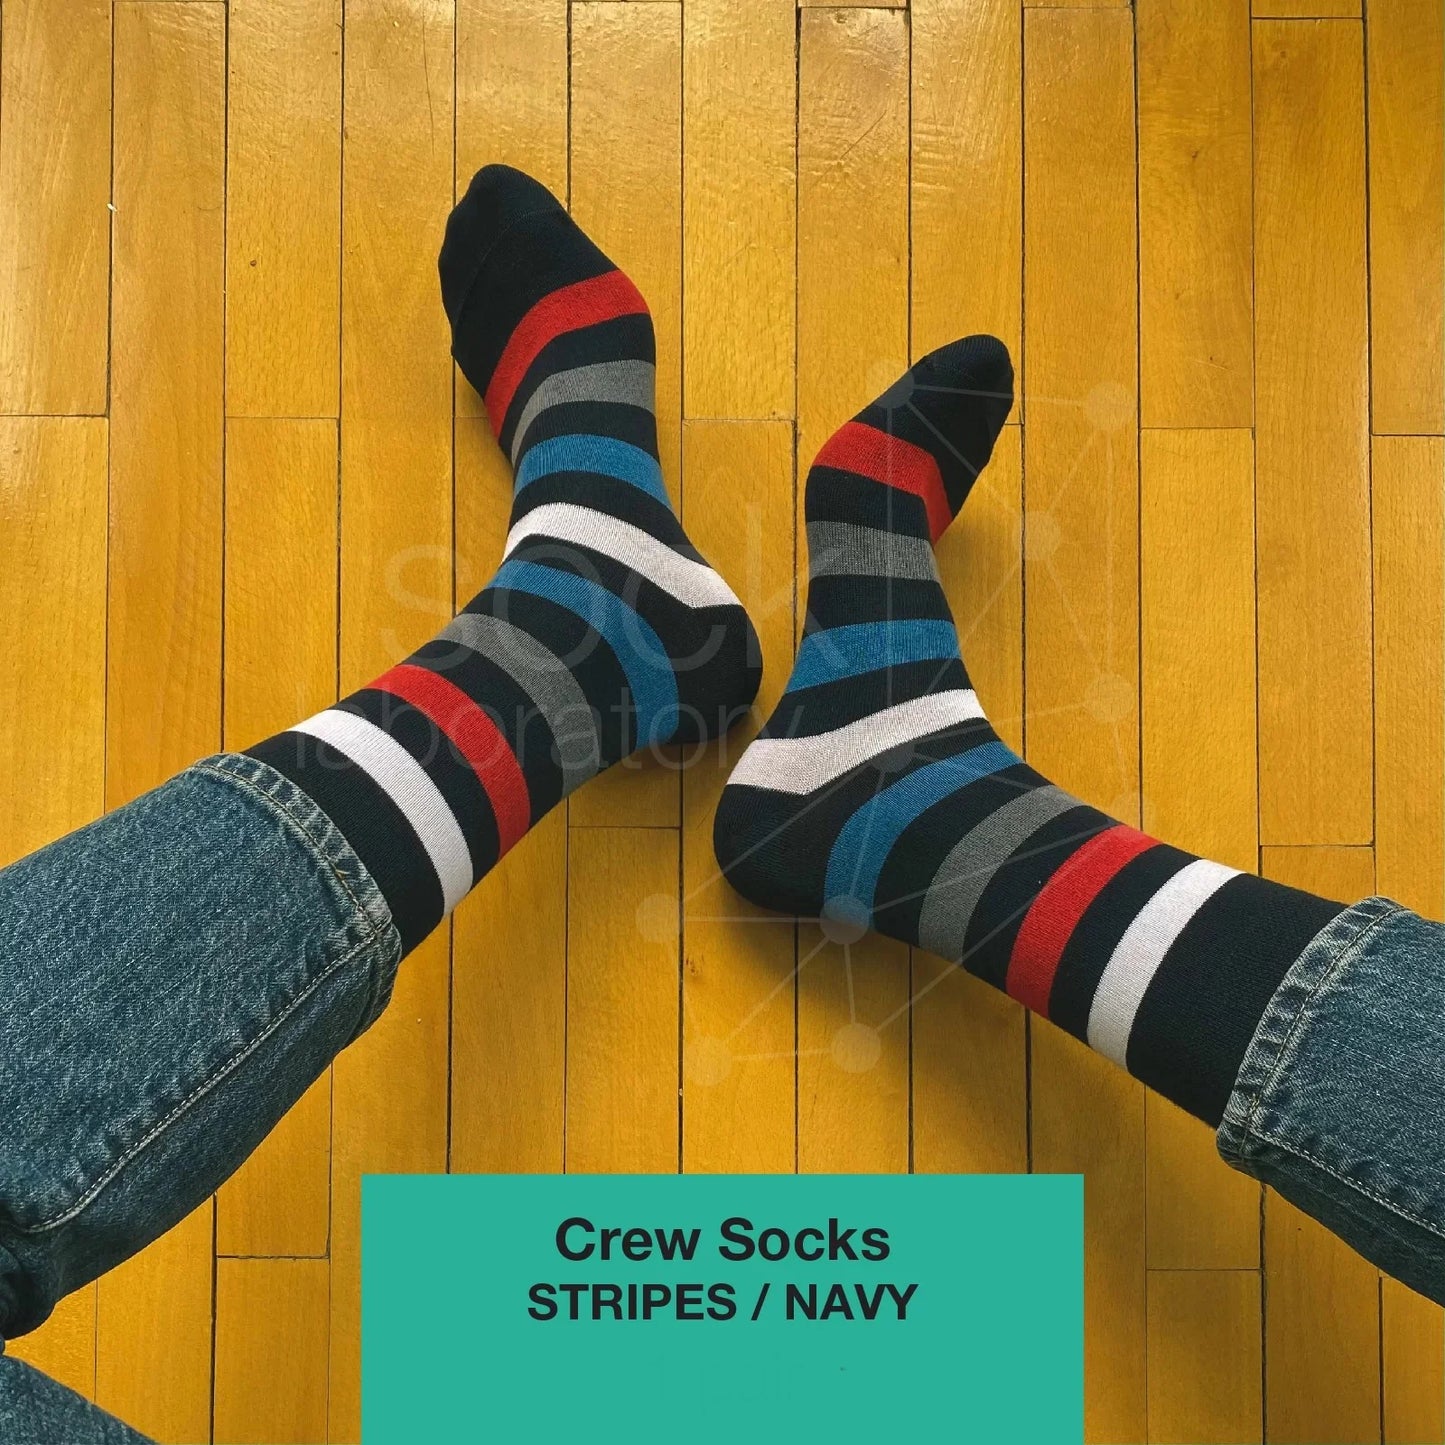 CREW SOCKS - Set of 3 / Navy Stripes /The Captain Stripes / The Christmas Stripes